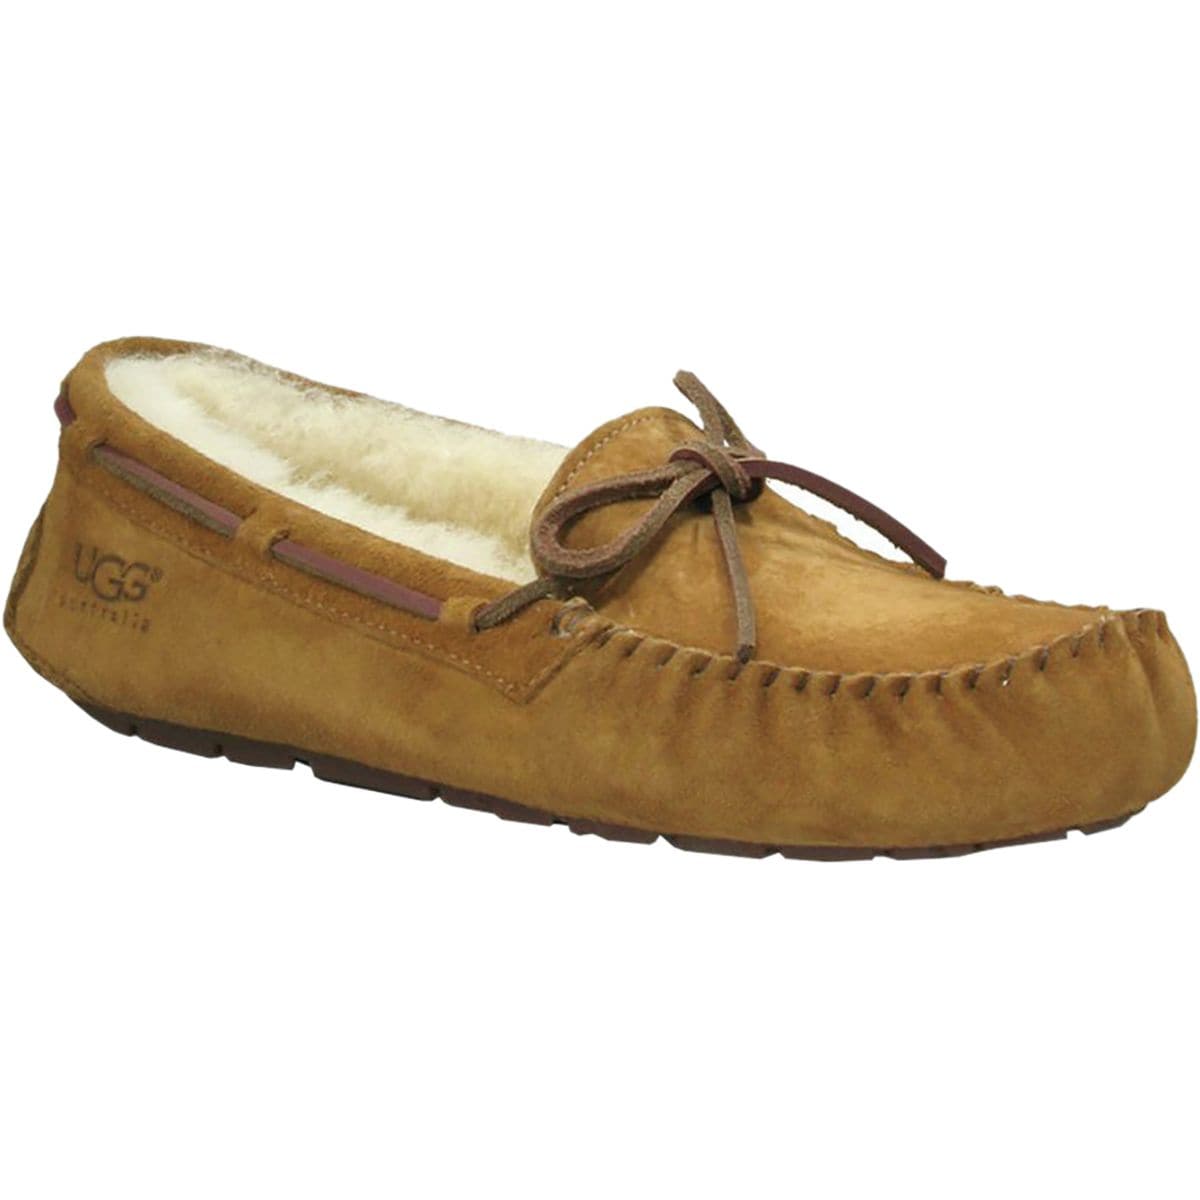 ugg australia women's dakota slippers